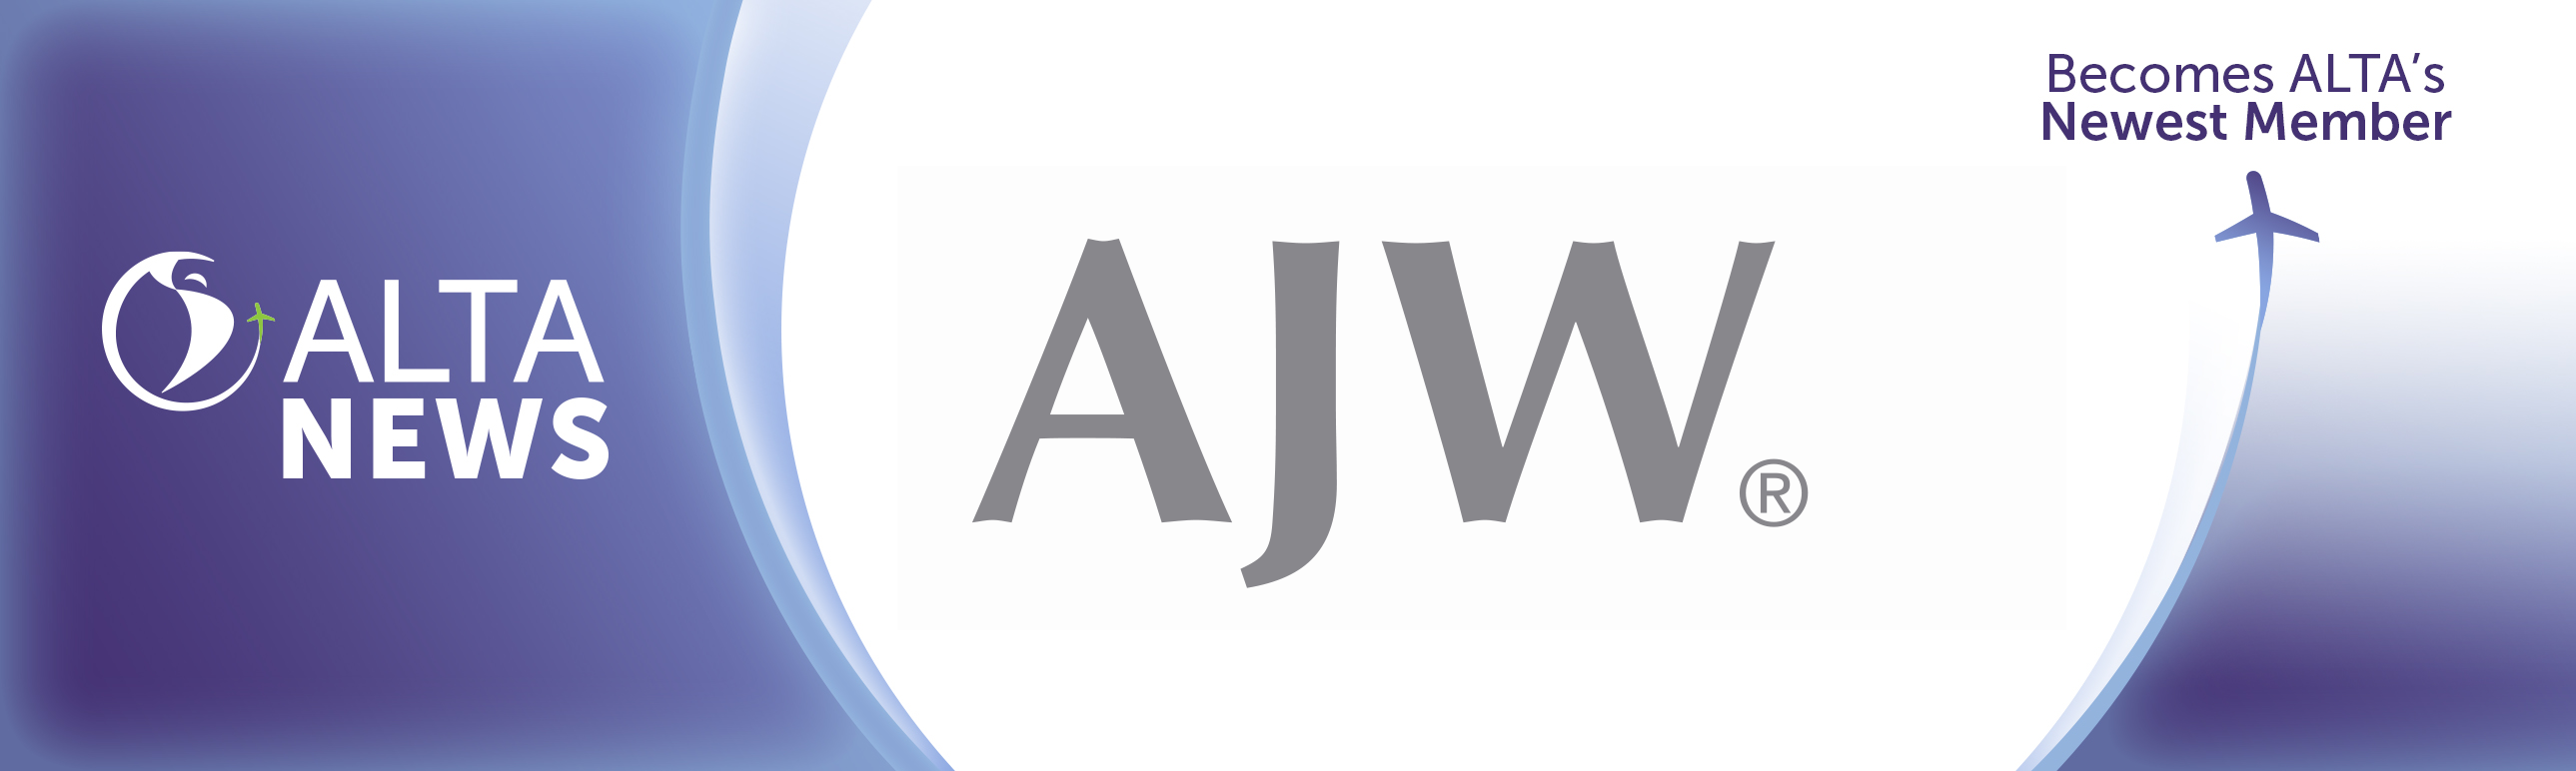 ALTA NEWS - AJW Group continúa su expansión en Latinoamérica al unirse a ALTA